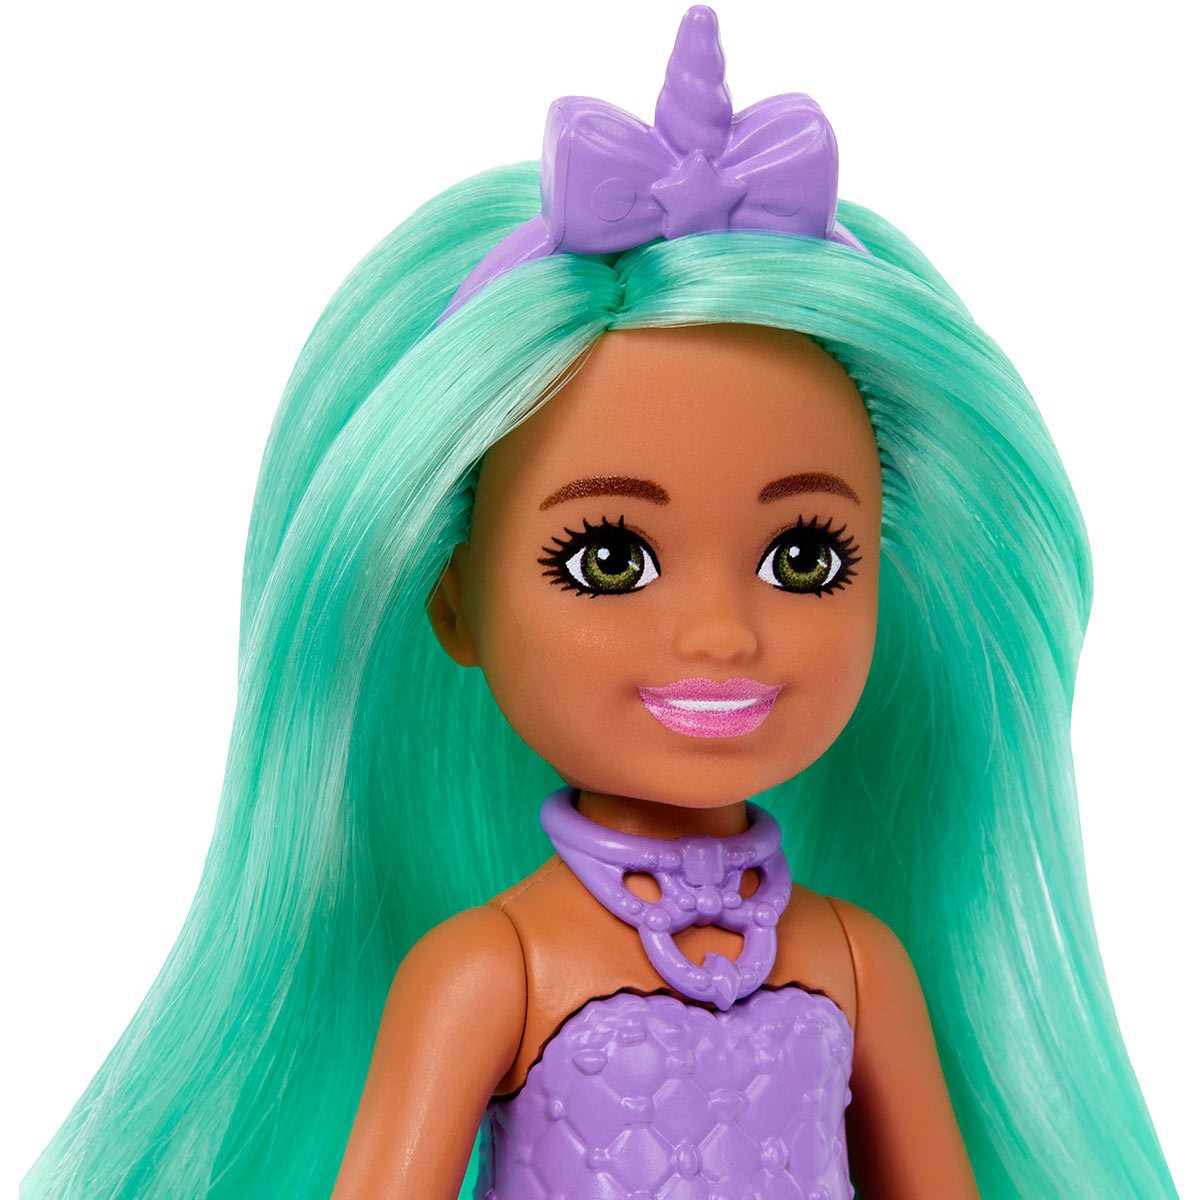 Barbie Unicorn Chelsea Doll with Green Hair